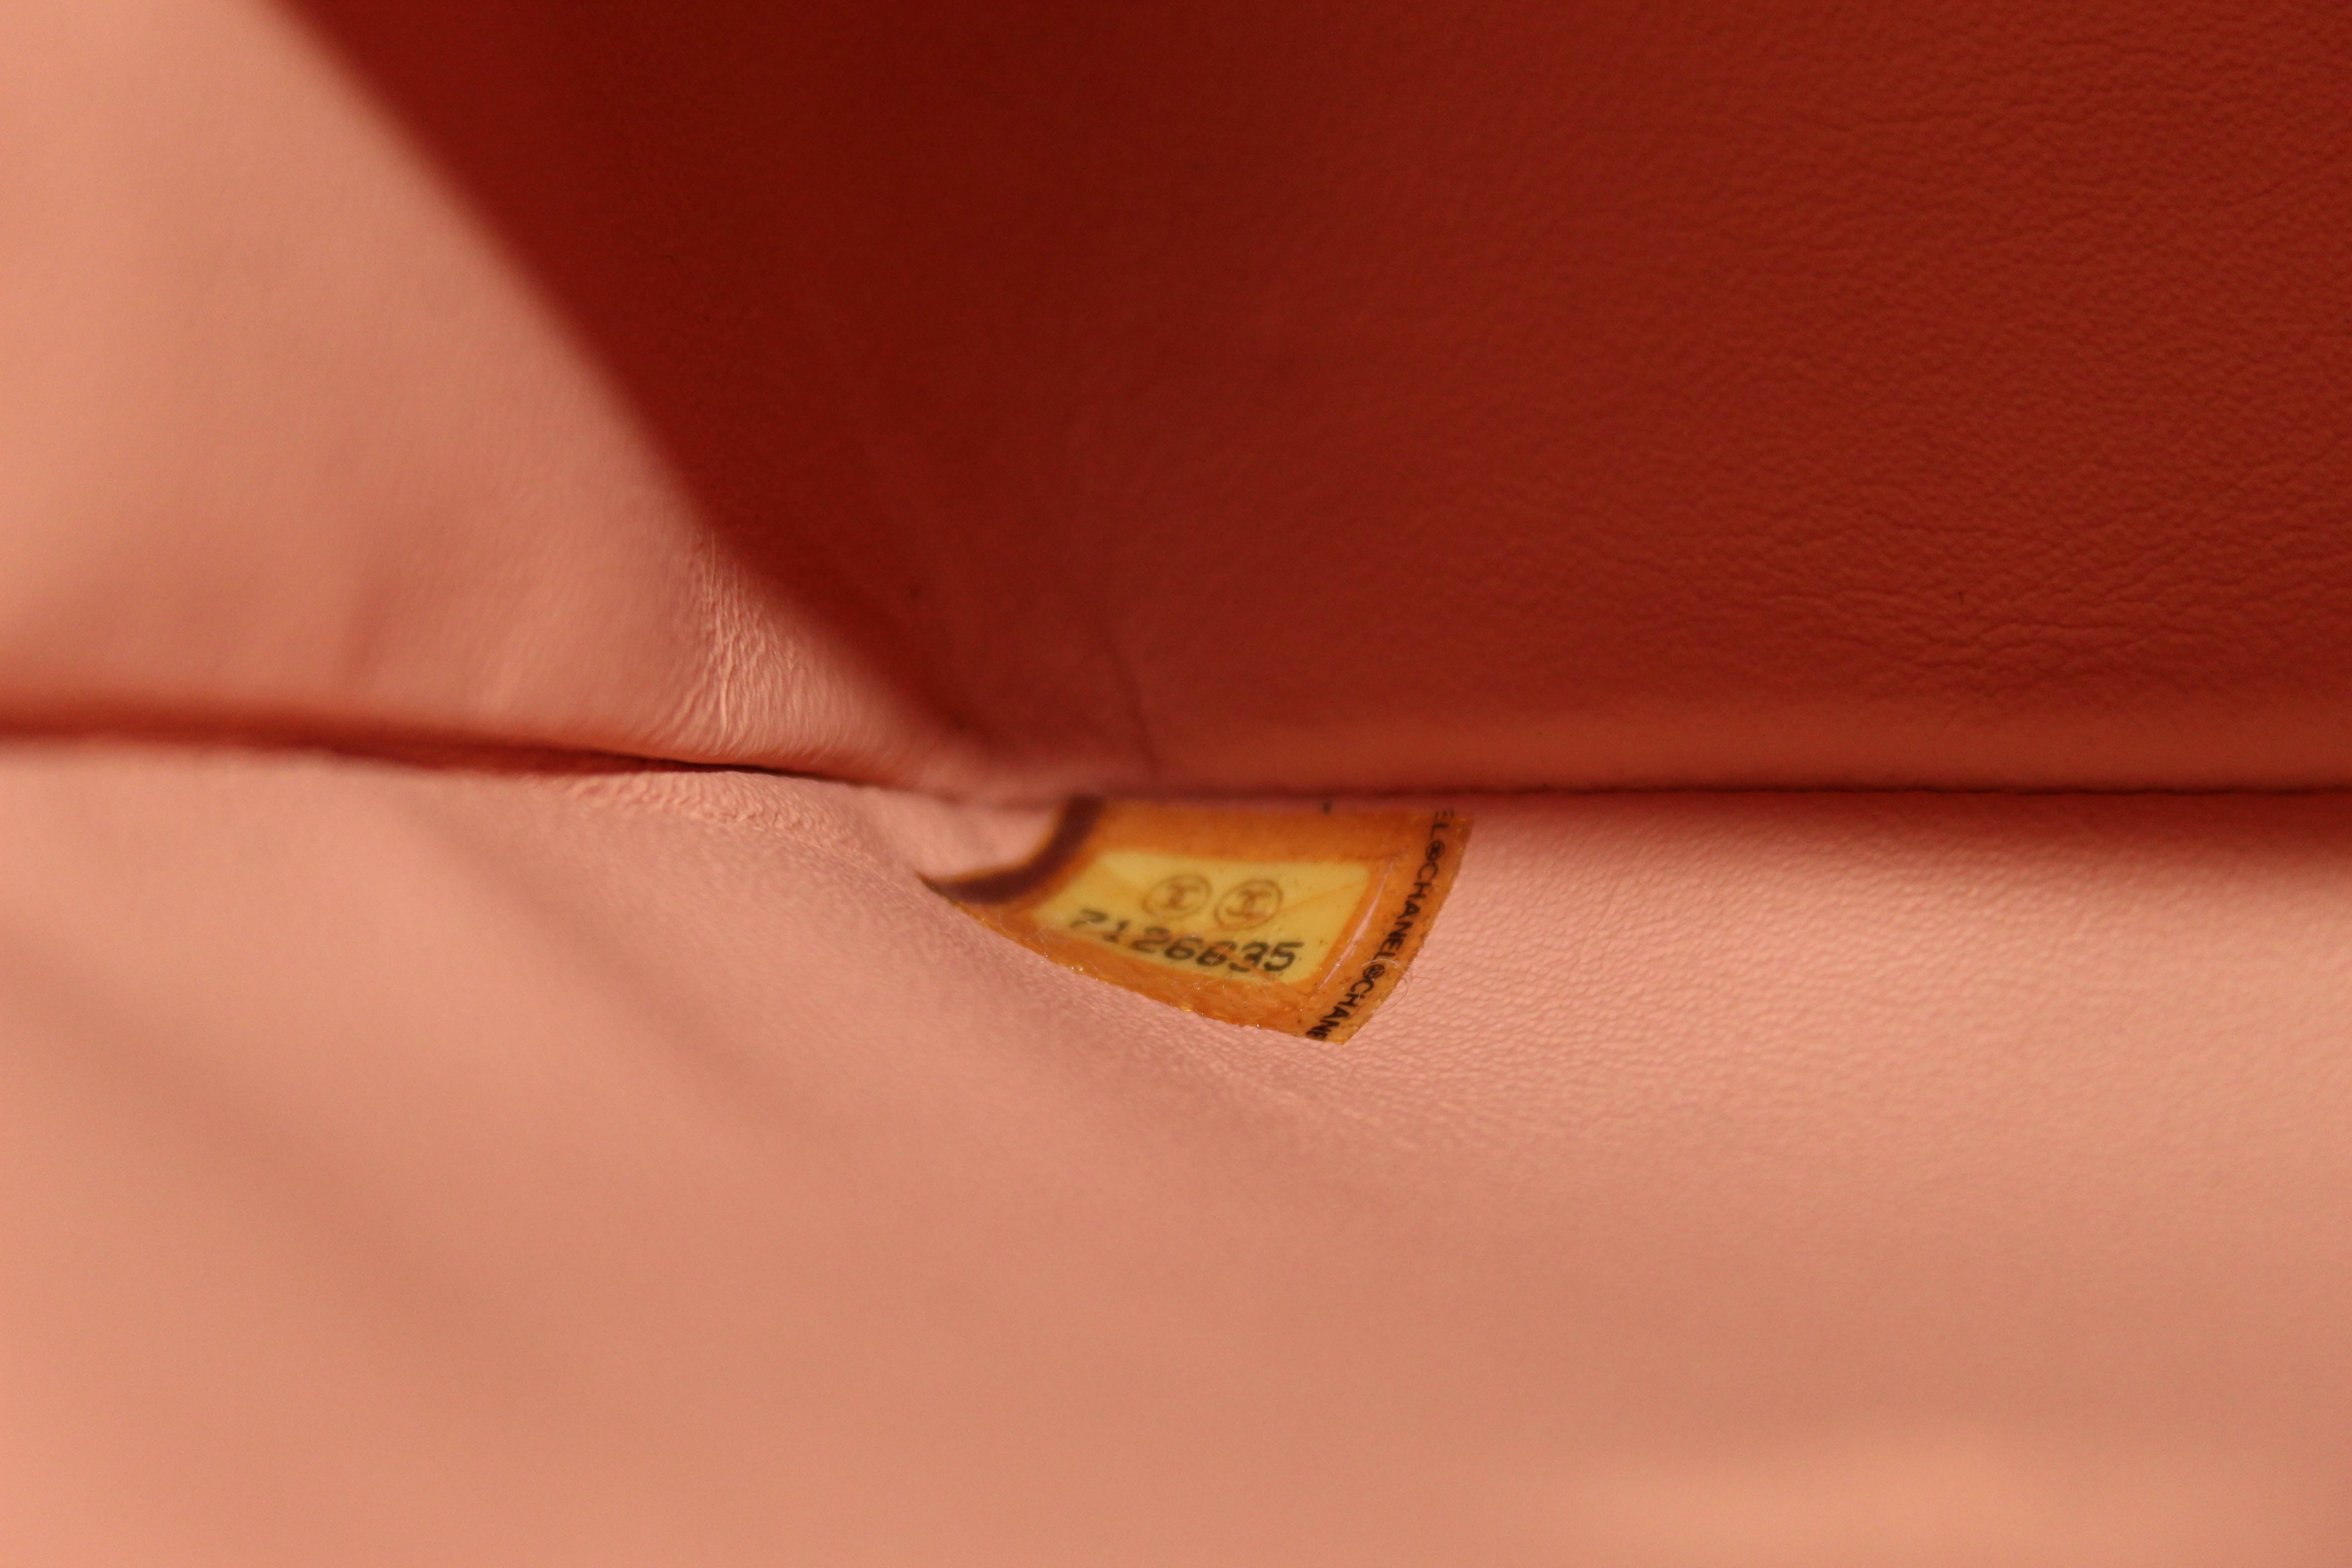 Authentic New Peach Lambskin Leather Medium Single flap Square Stitch Chain Shoulder Messenger Bag